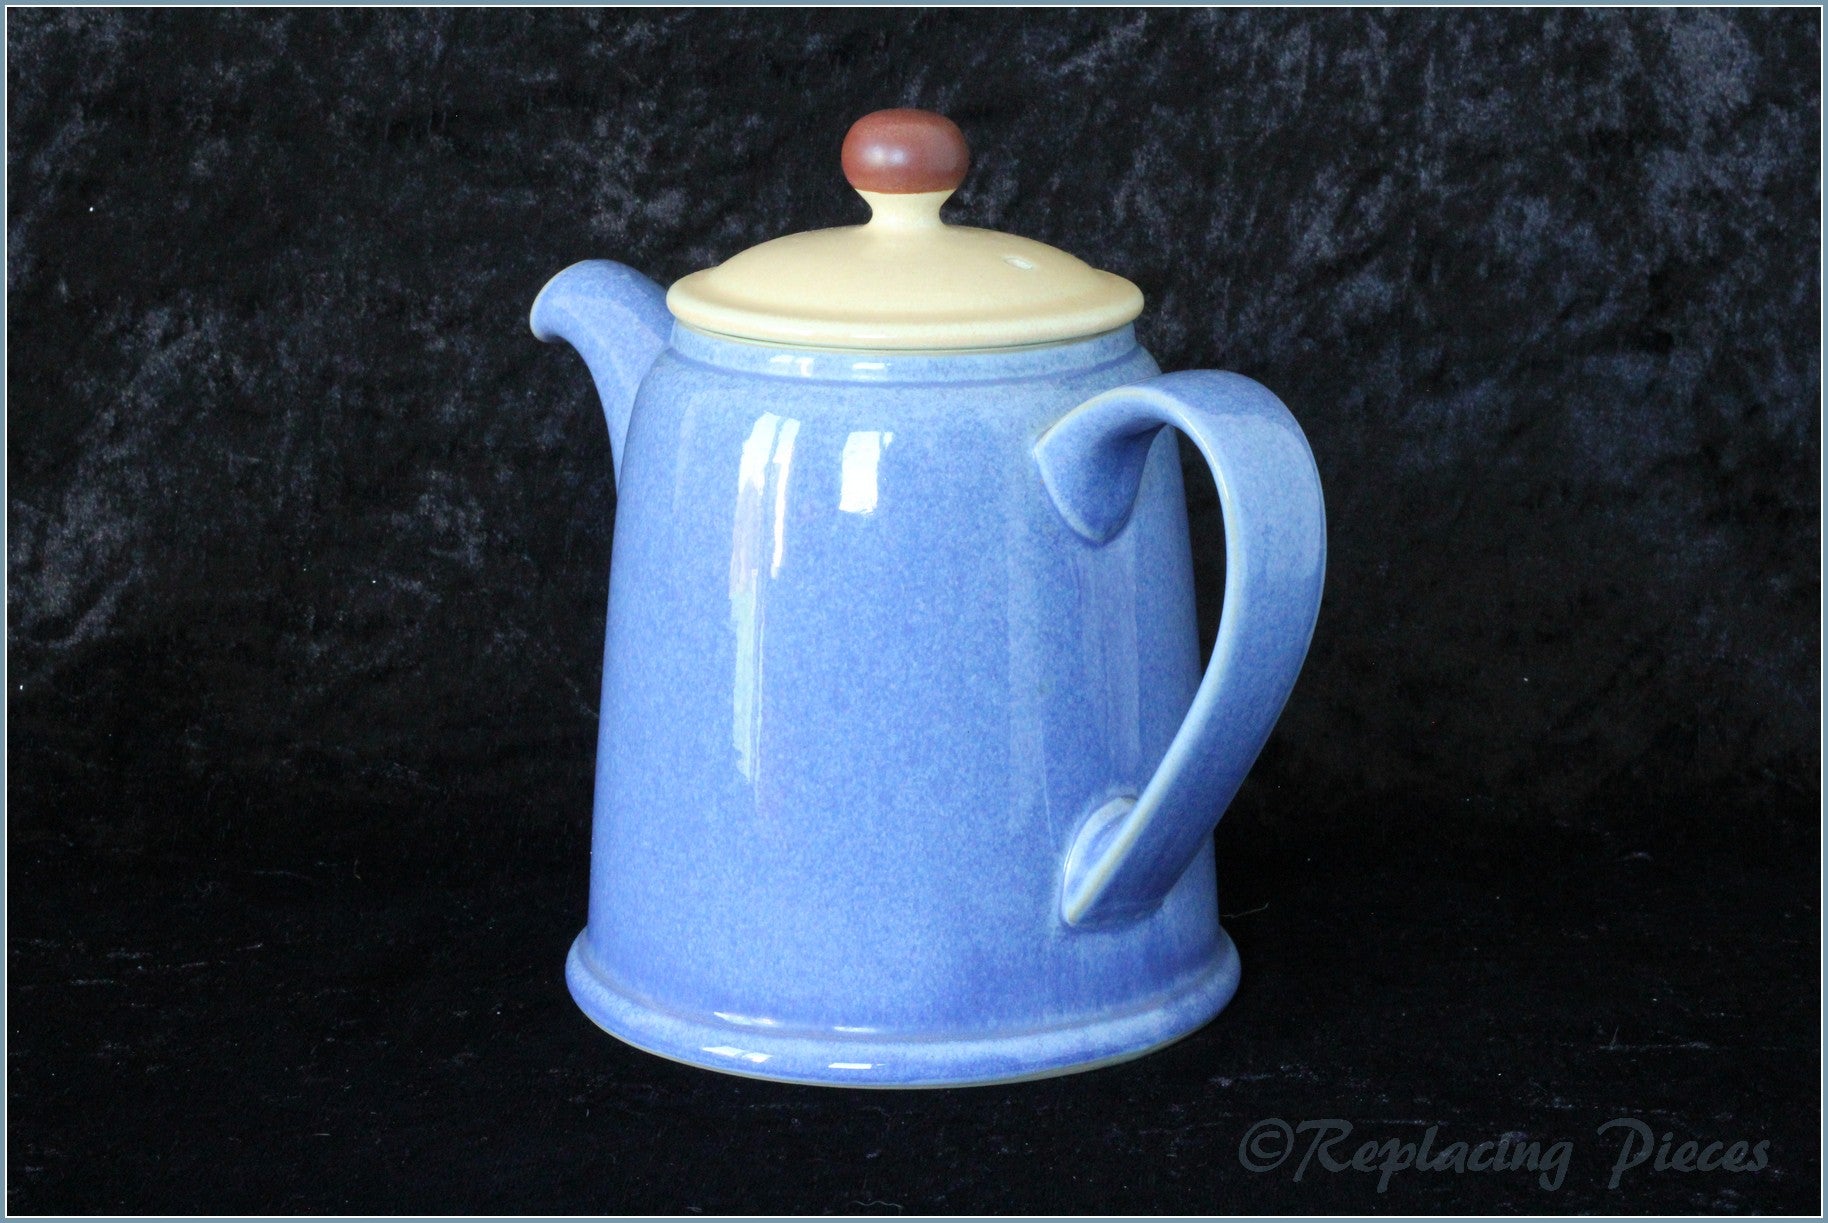 Discontinued Denby - Juice - Teapot (large)